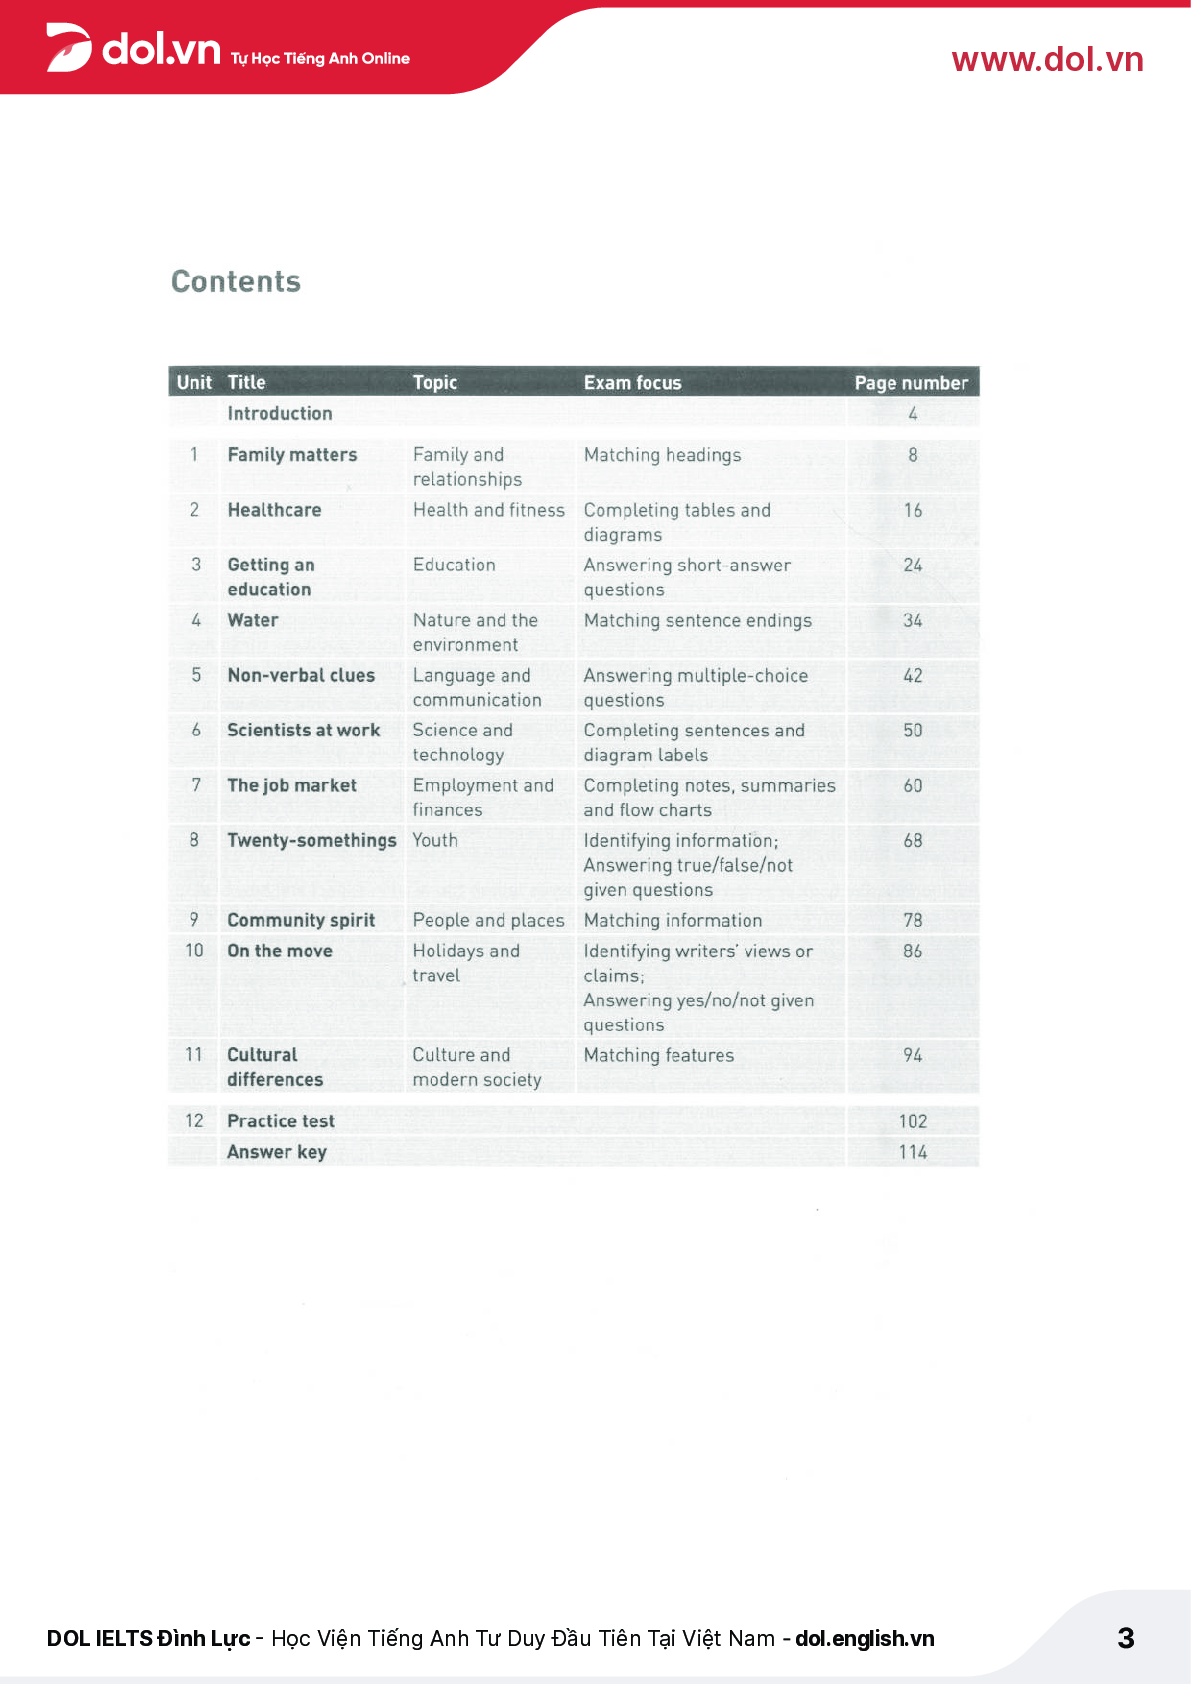 Sách Collins Reading for IELTS pdf | Xem online, tải PDF miễn phí (trang 3)